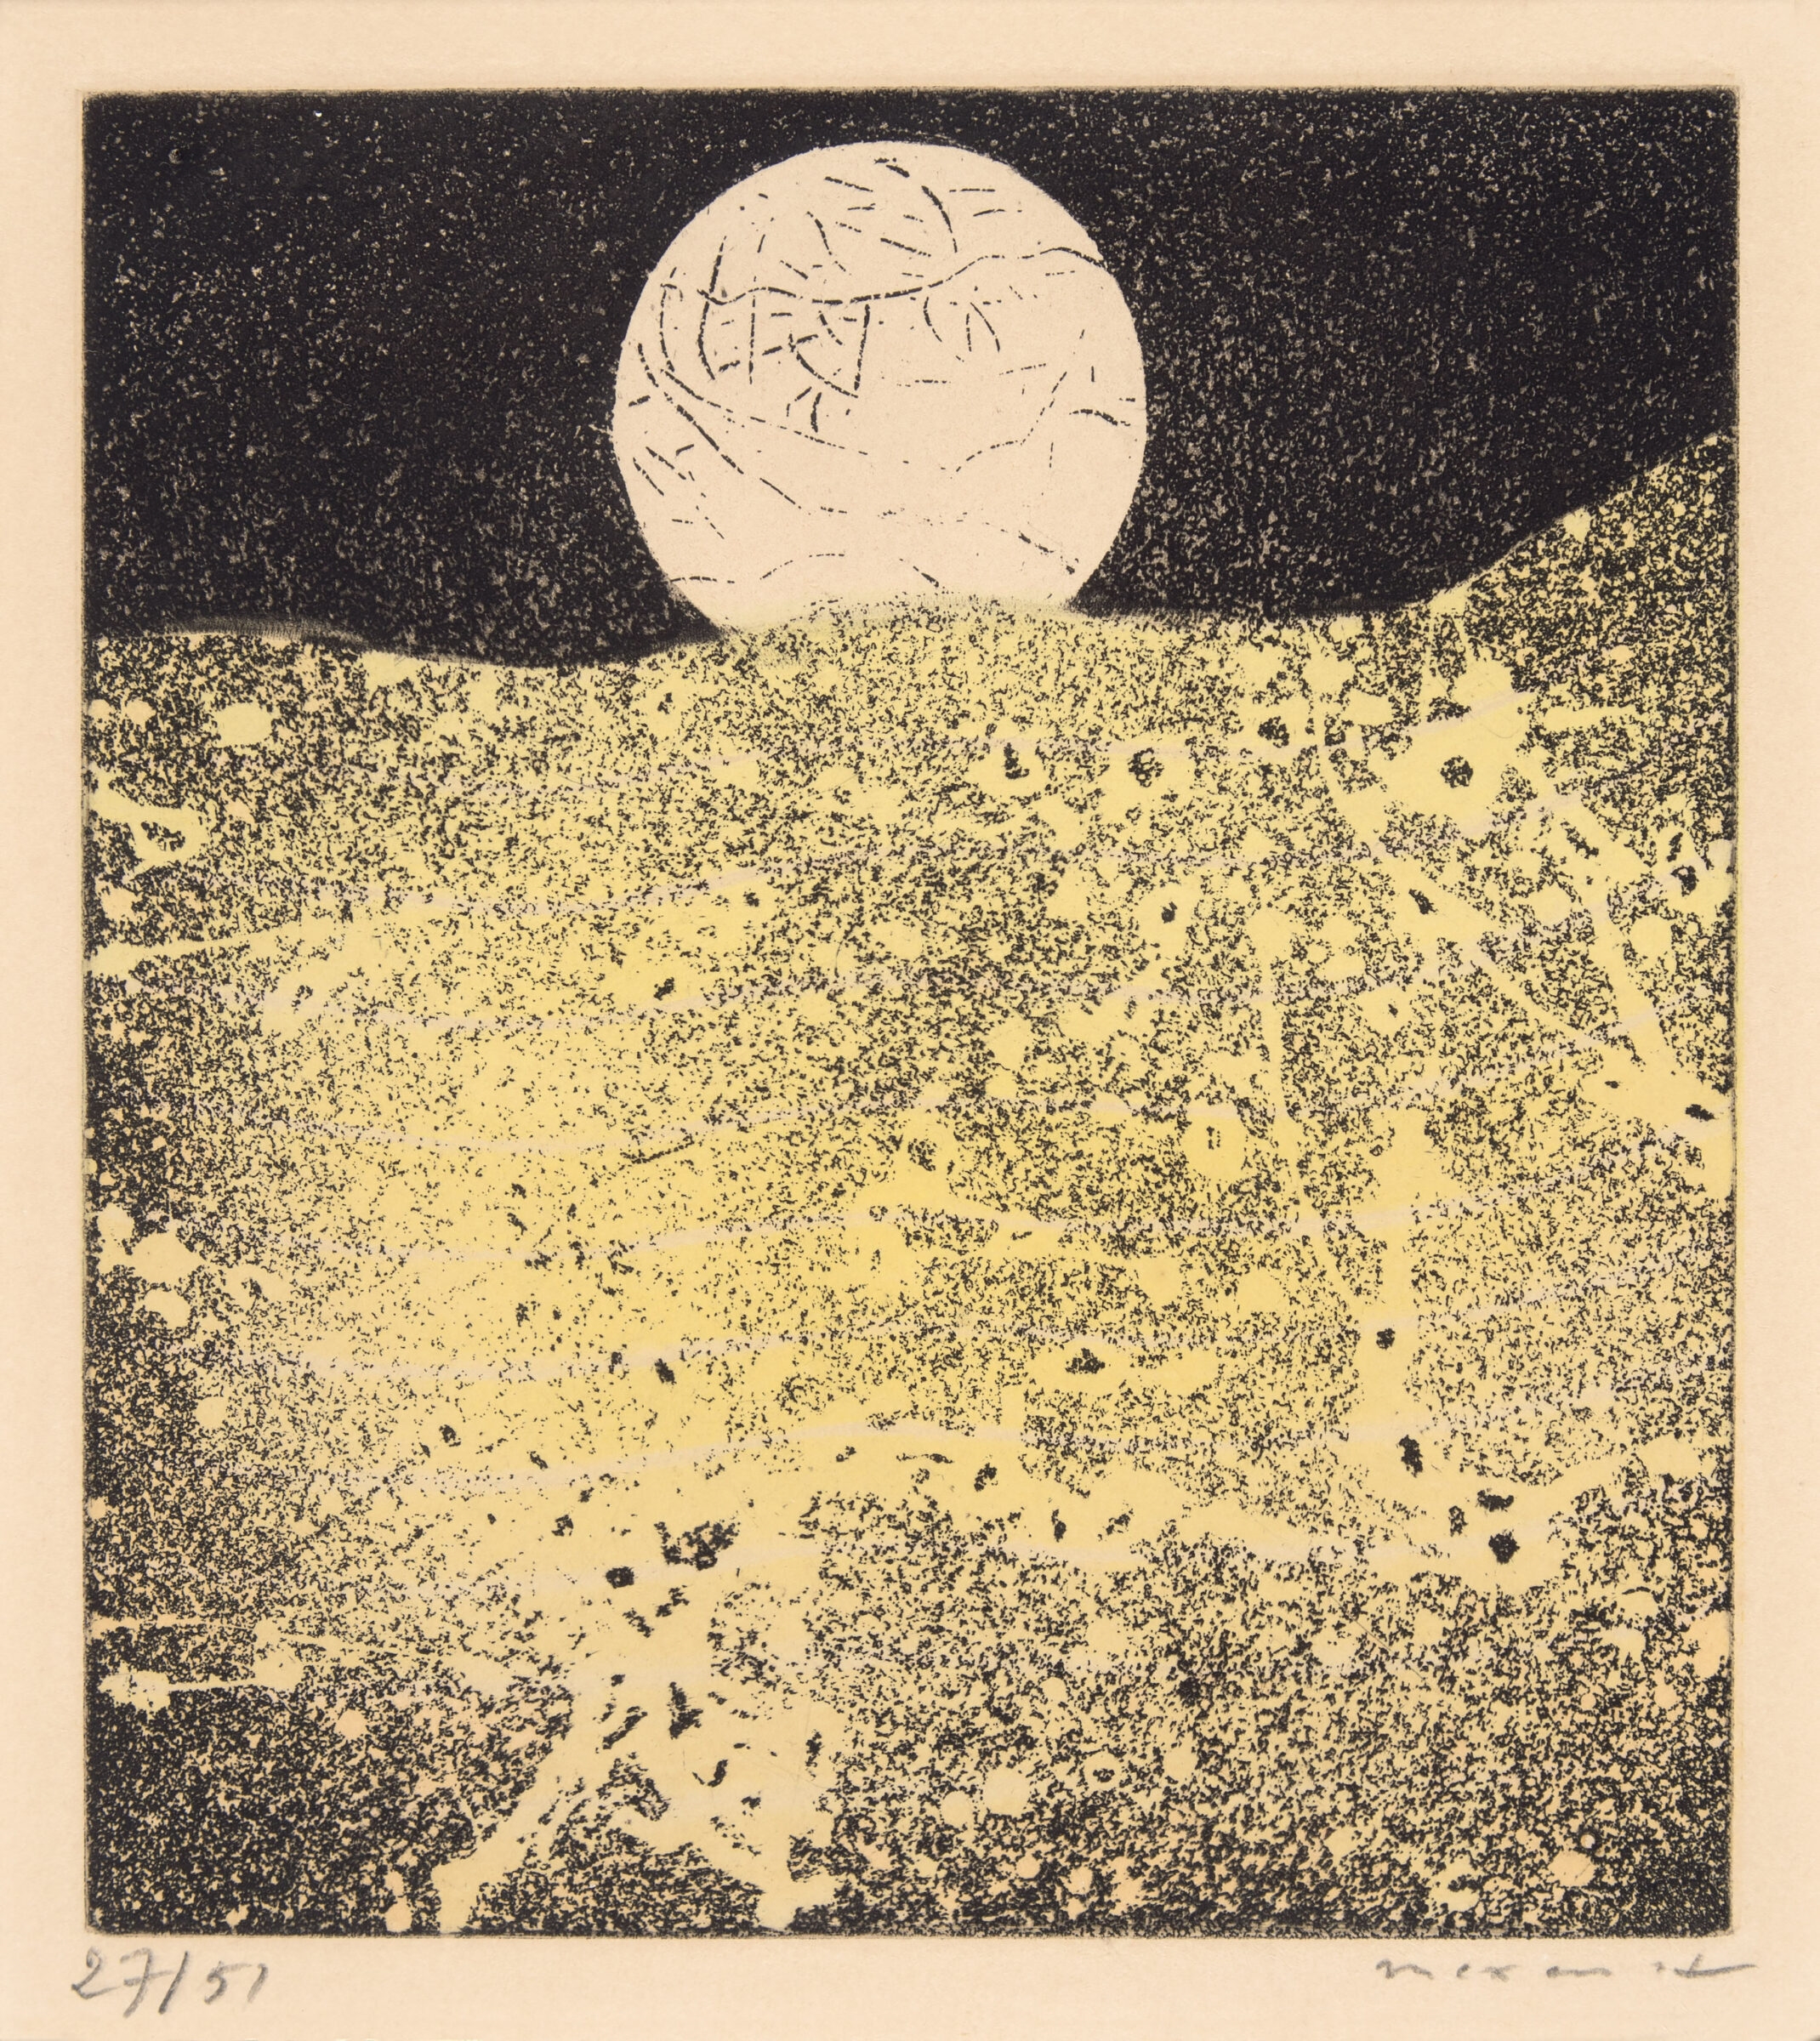 Montagne sacrée. Farbradierung auf Vélin. 1963. 14,9 x 13,2 (35,5 x 28,5) cm, unter Passepartout. Unter Glas gerahmt - Max Ernst